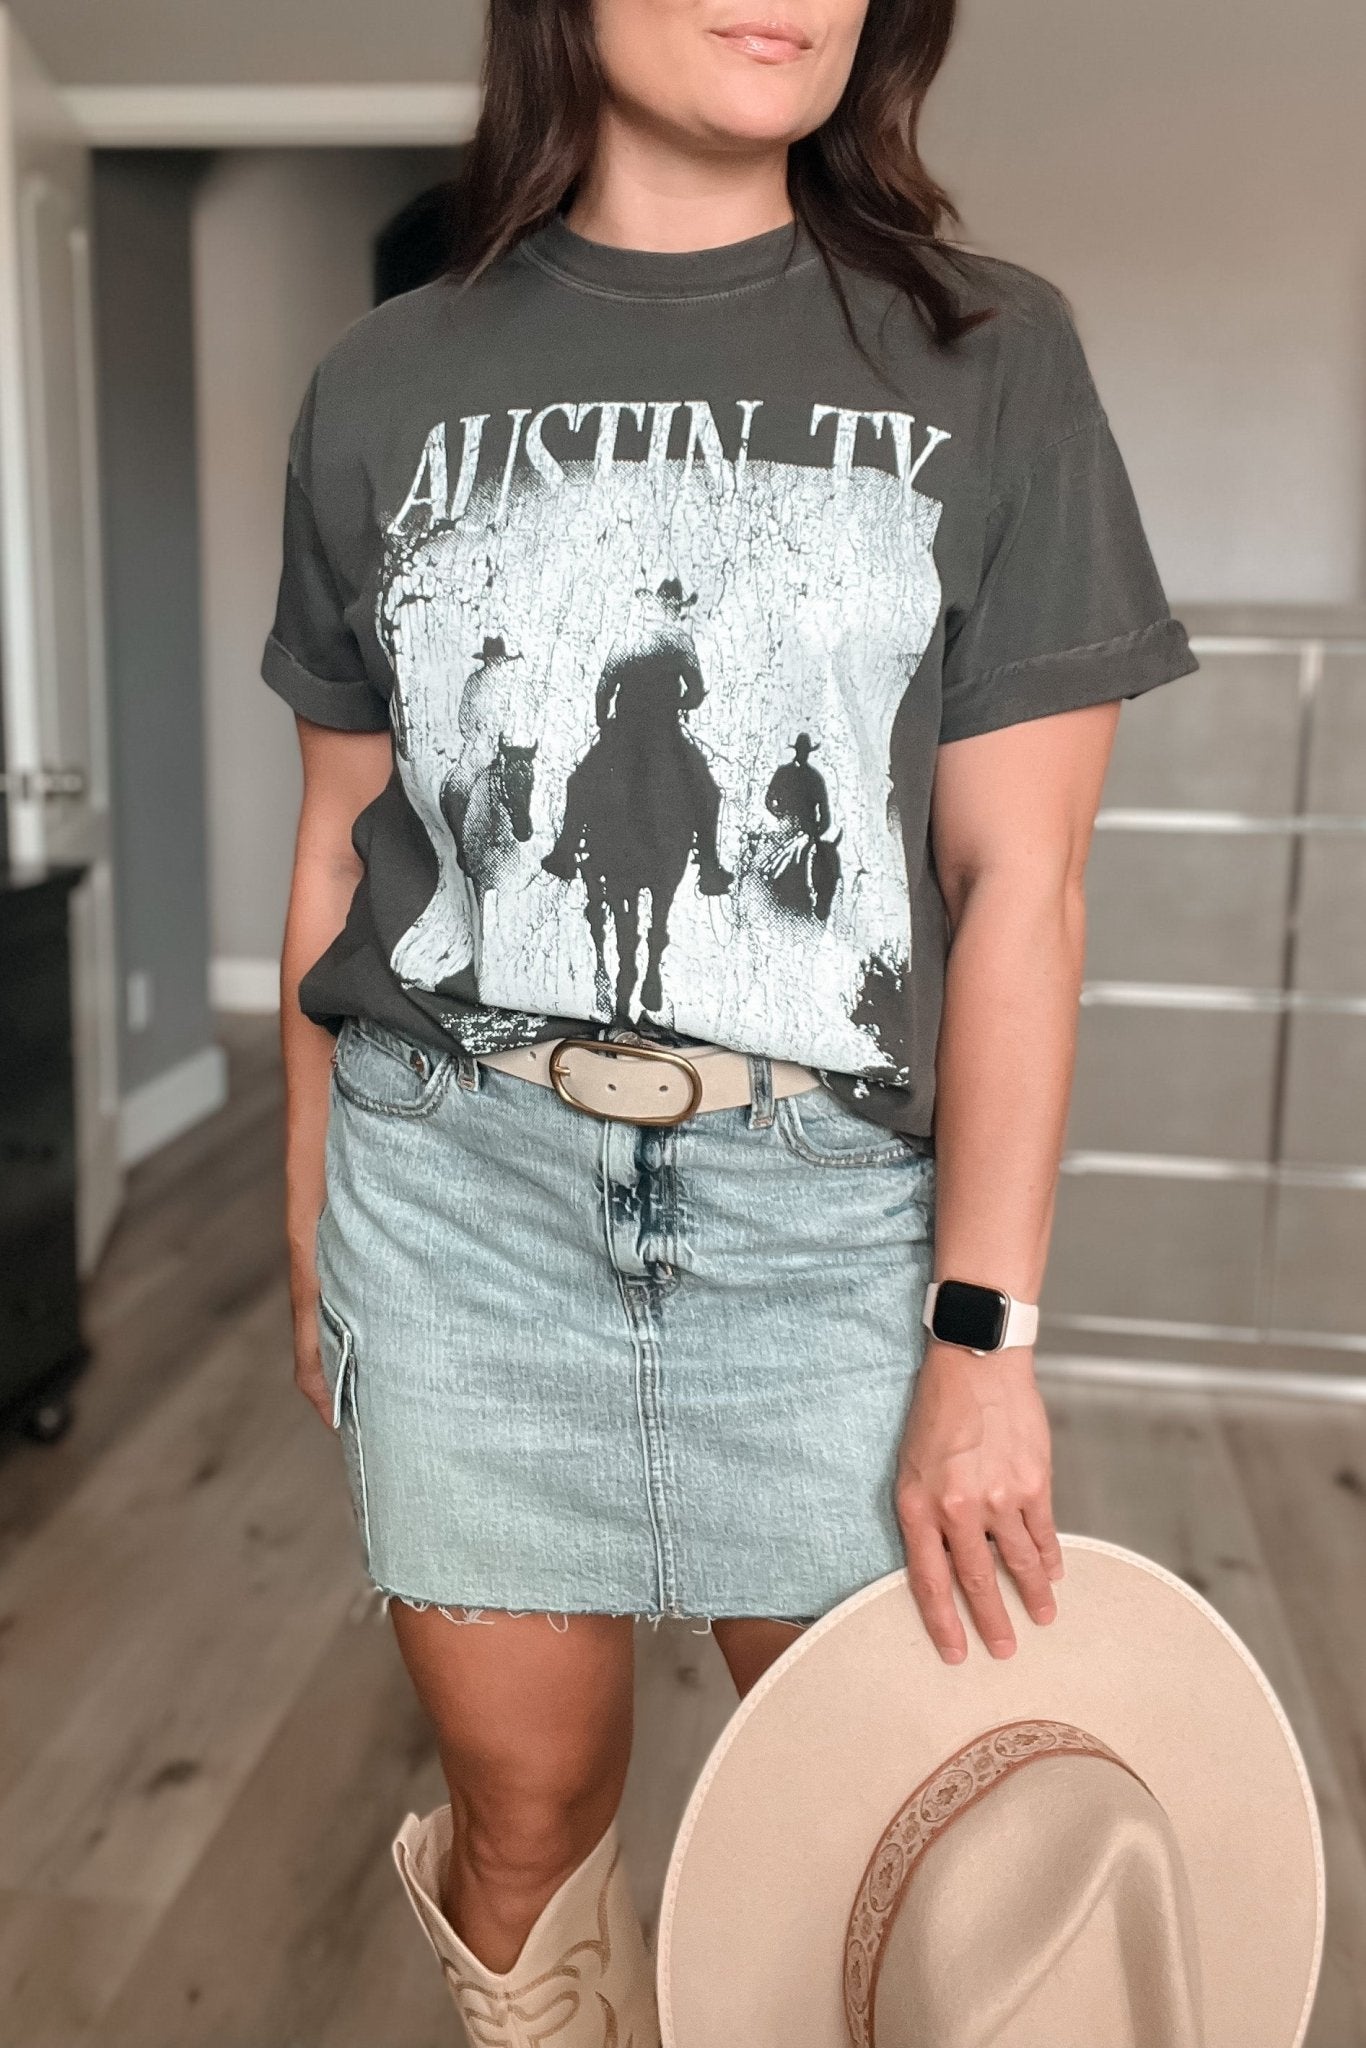 Austin Texas Cowboy Graphic Tee | Girl Dangerous - Women's Shirts & Tops - Blooming Daily